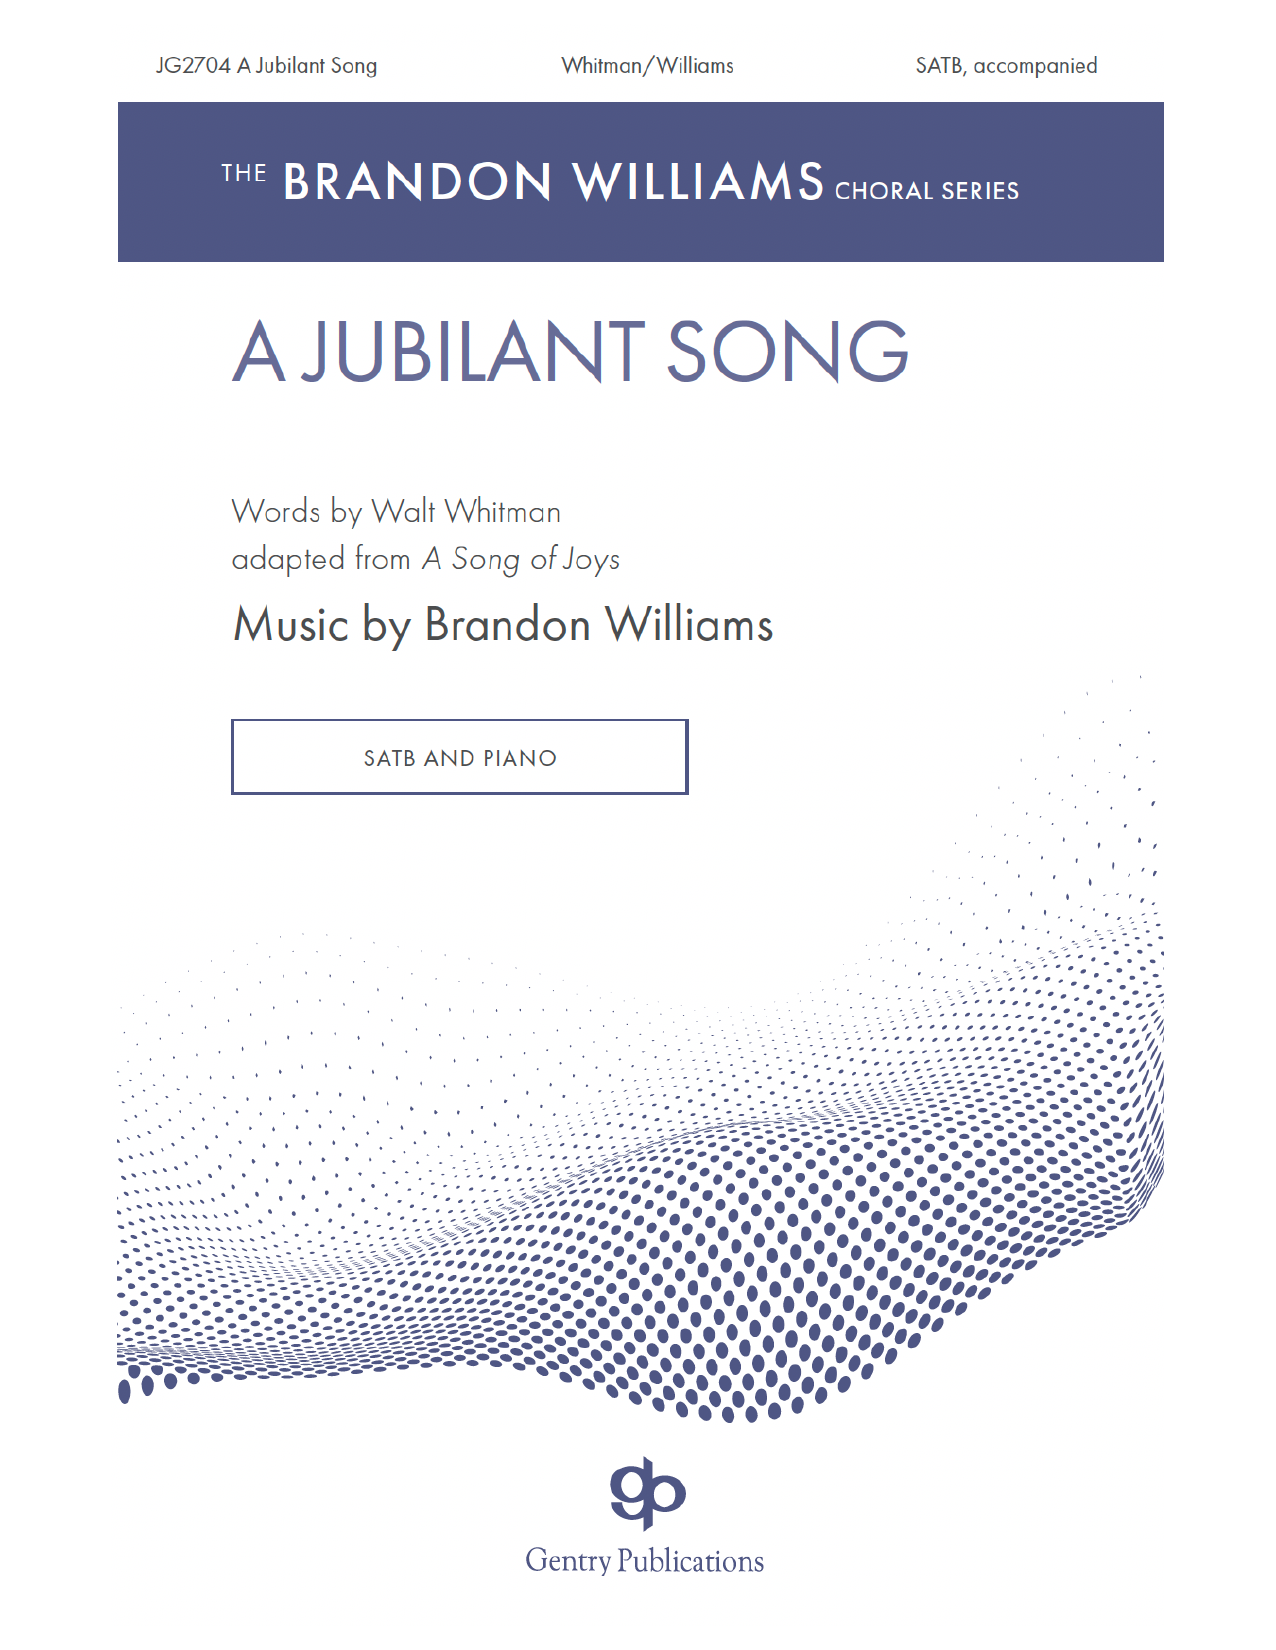 Brandon Williams A Jubilant Song sheet music notes and chords arranged for SATB Choir